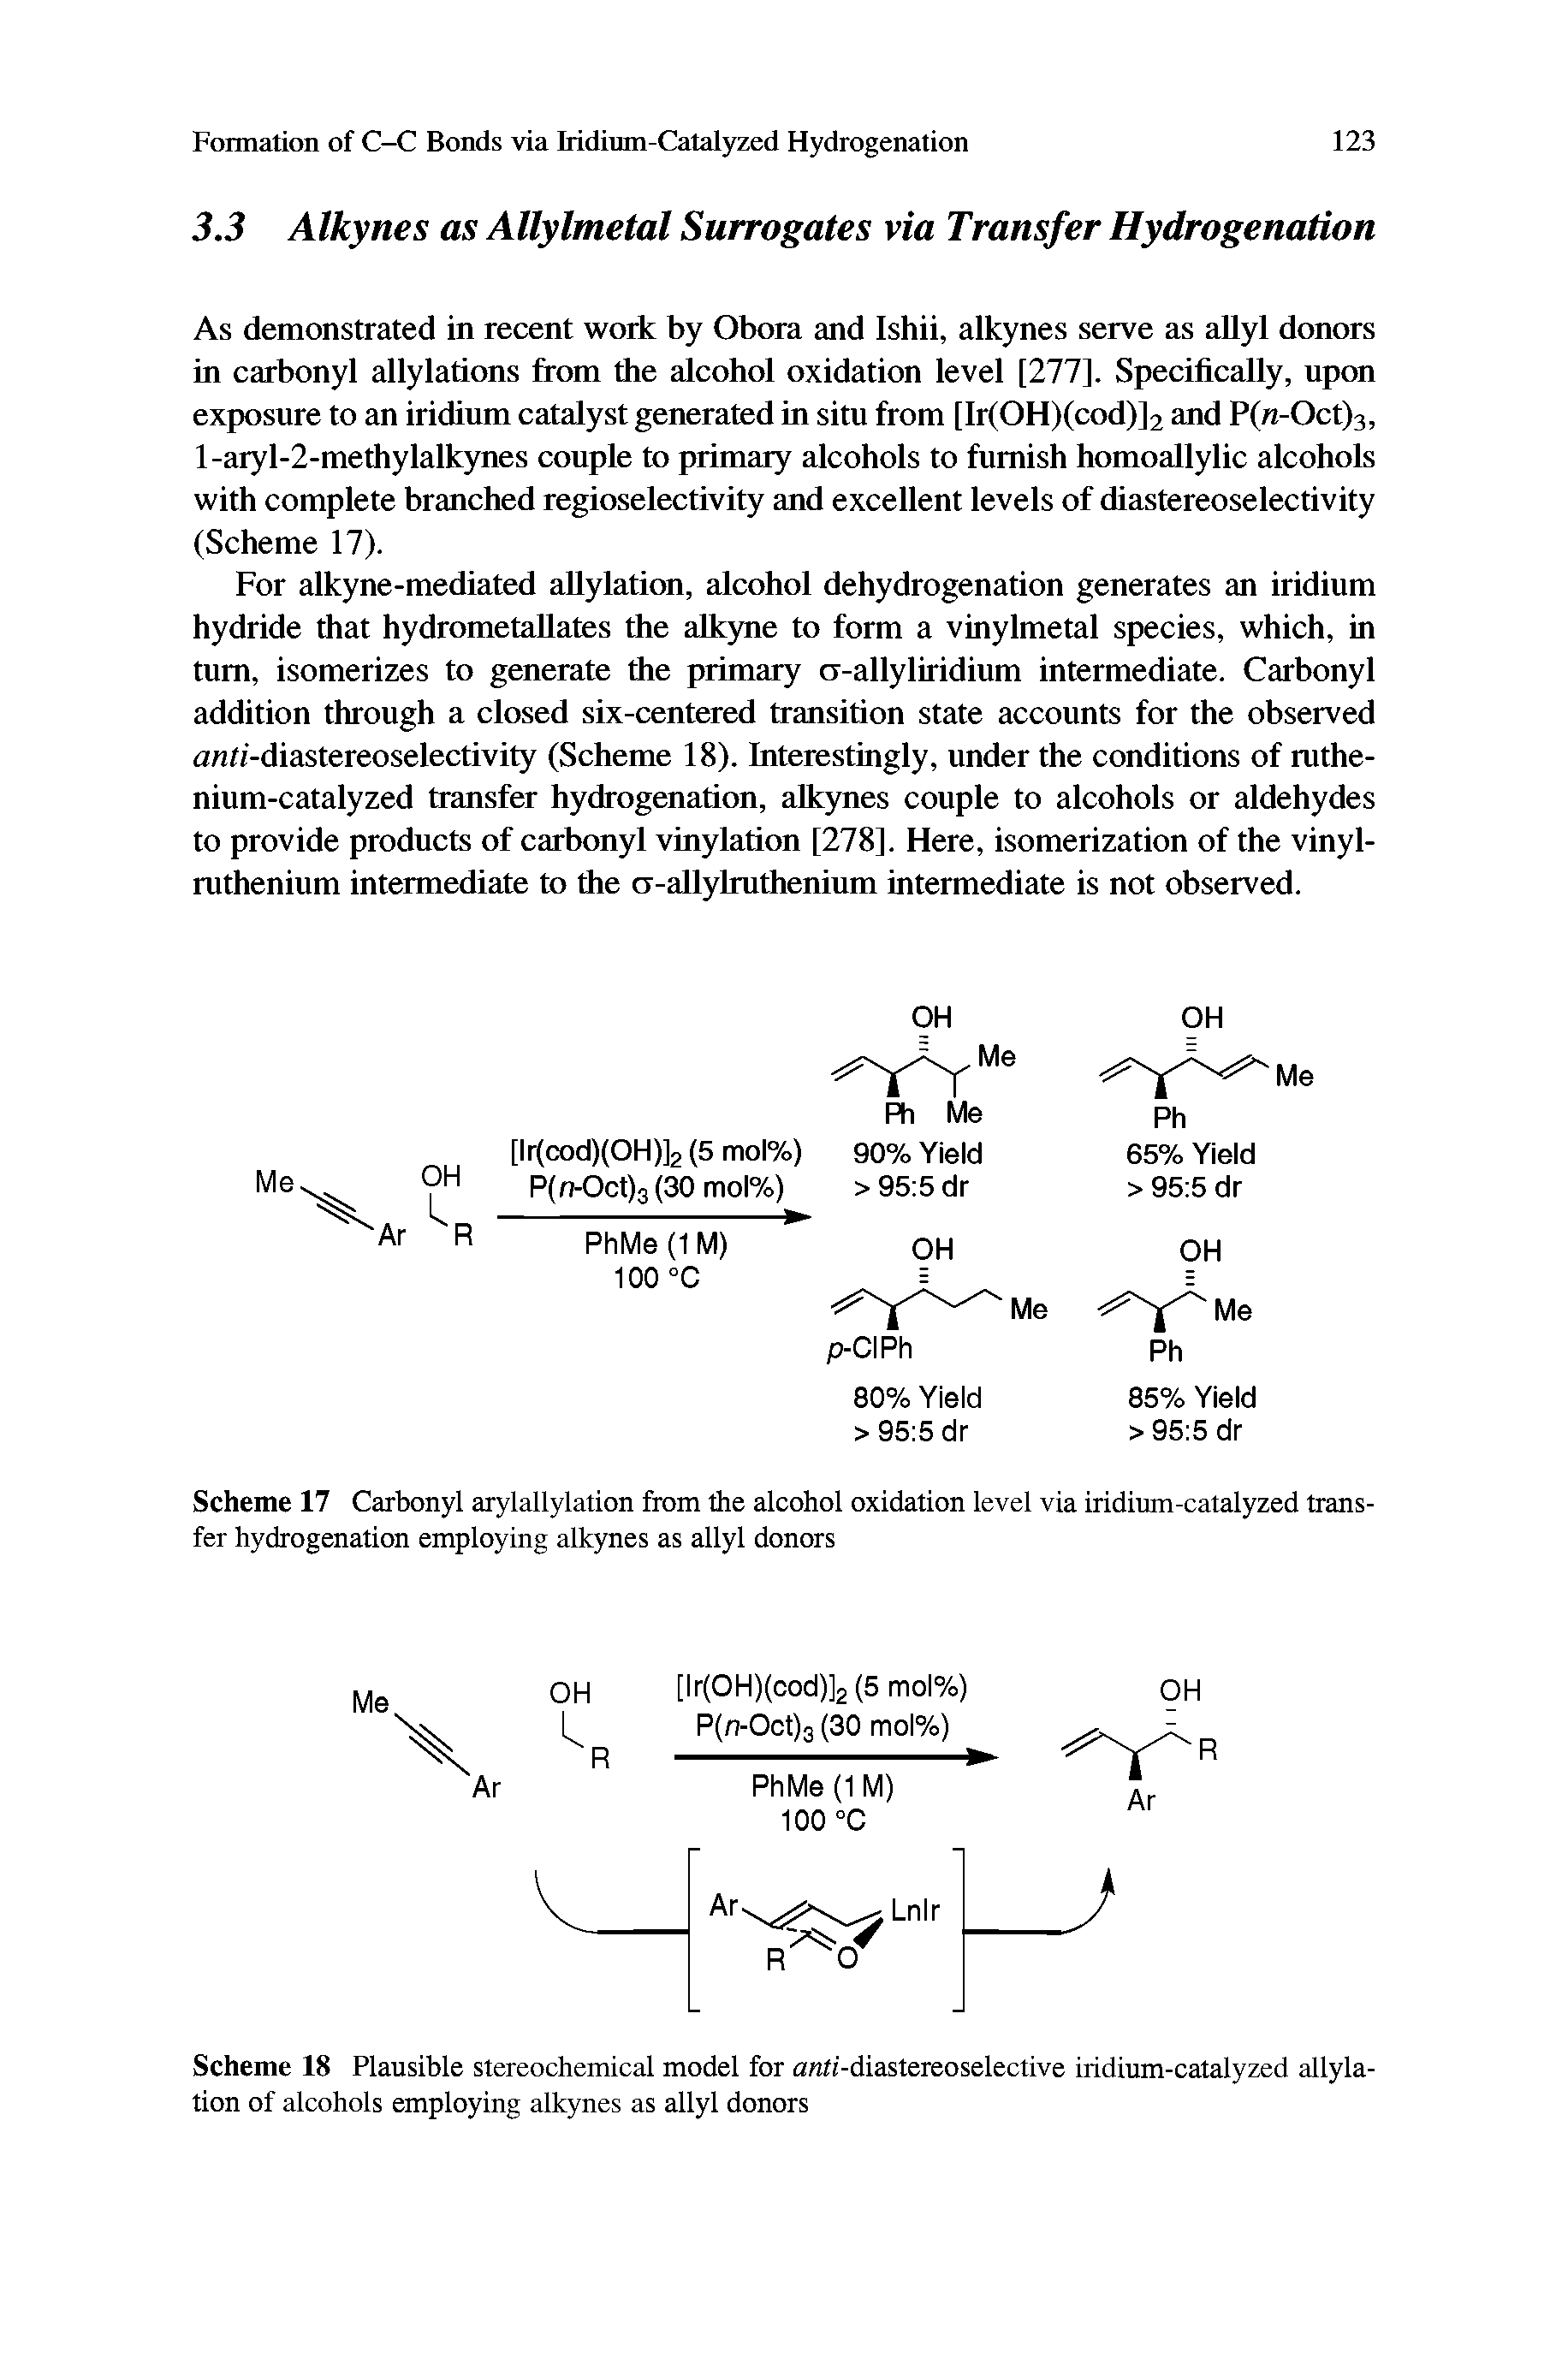 Scheme 17 Carbonyl arylallylation from the alcohol oxidation level via iridium-catalyzed transfer hydrogenation employing alkynes as allyl donors...